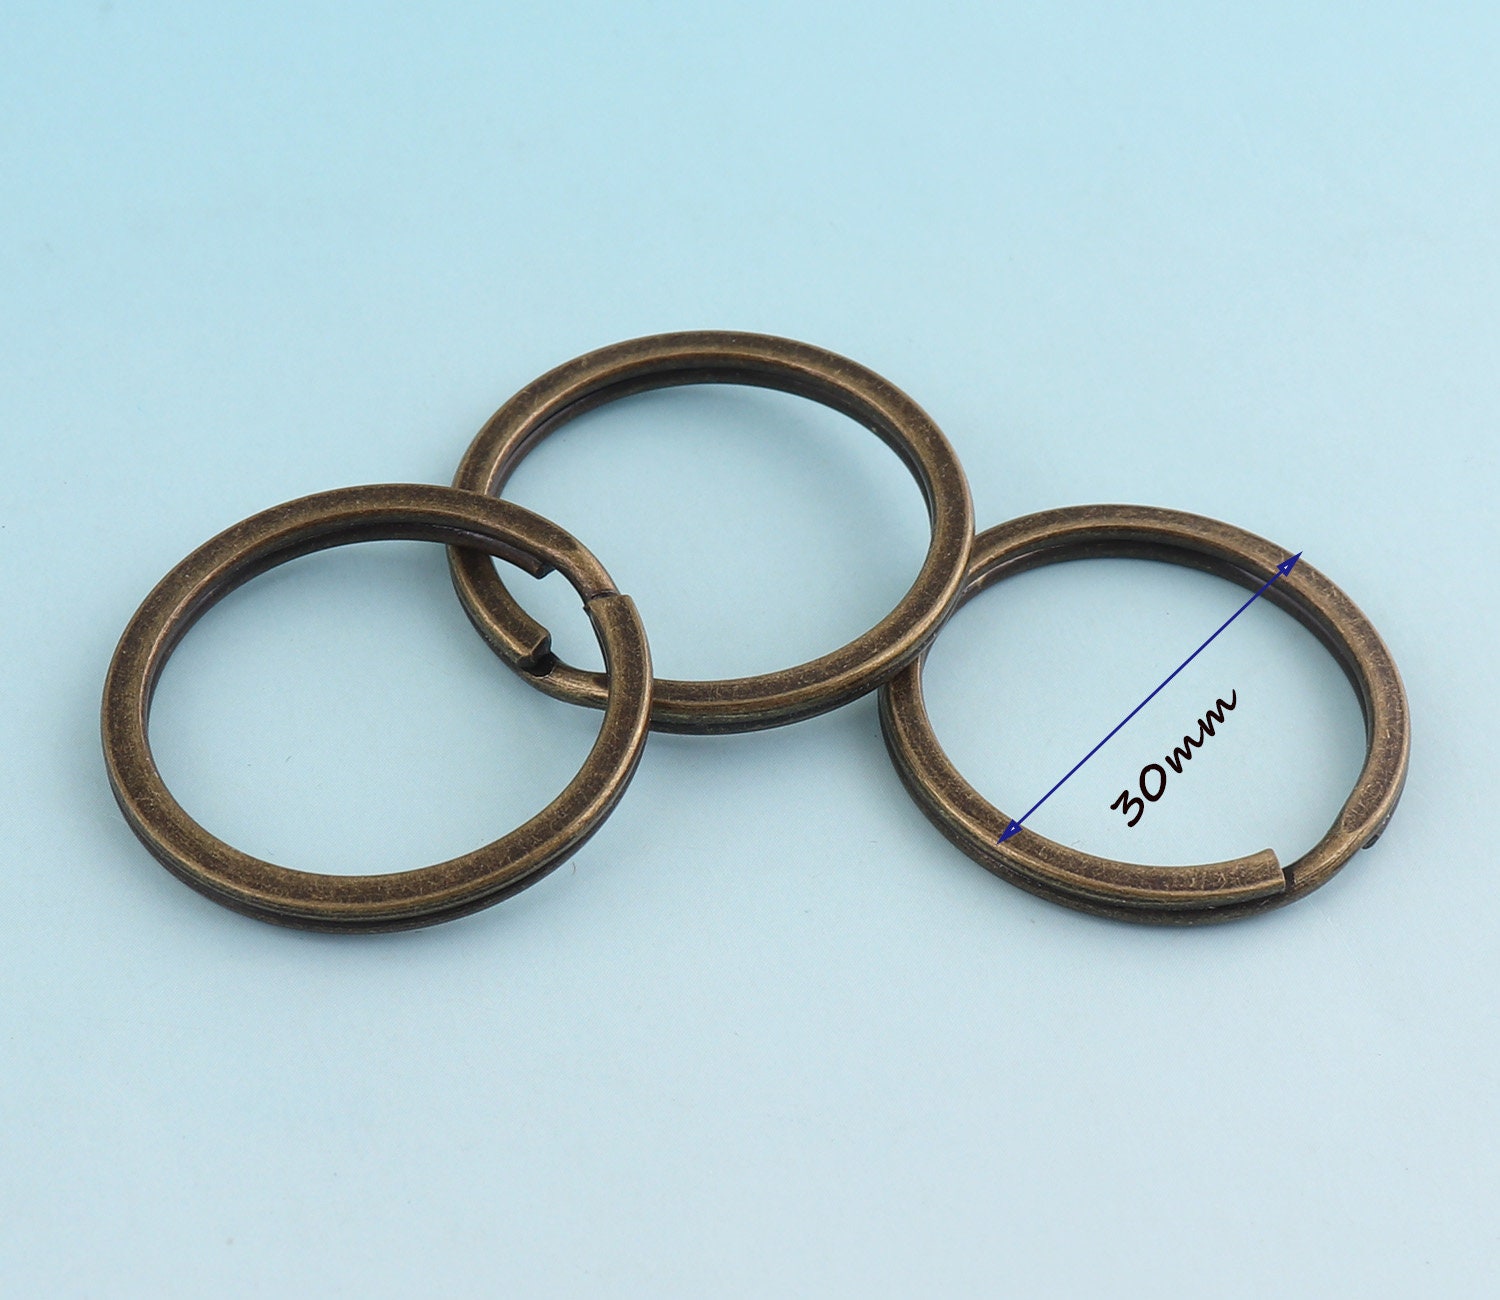 100pcs 8mminner Small Key Ring Rose Gold/gold O Ring Large Key Fob Ring  Metal Split Ring for Key Chain Wholesale Split Key Rings Finding 